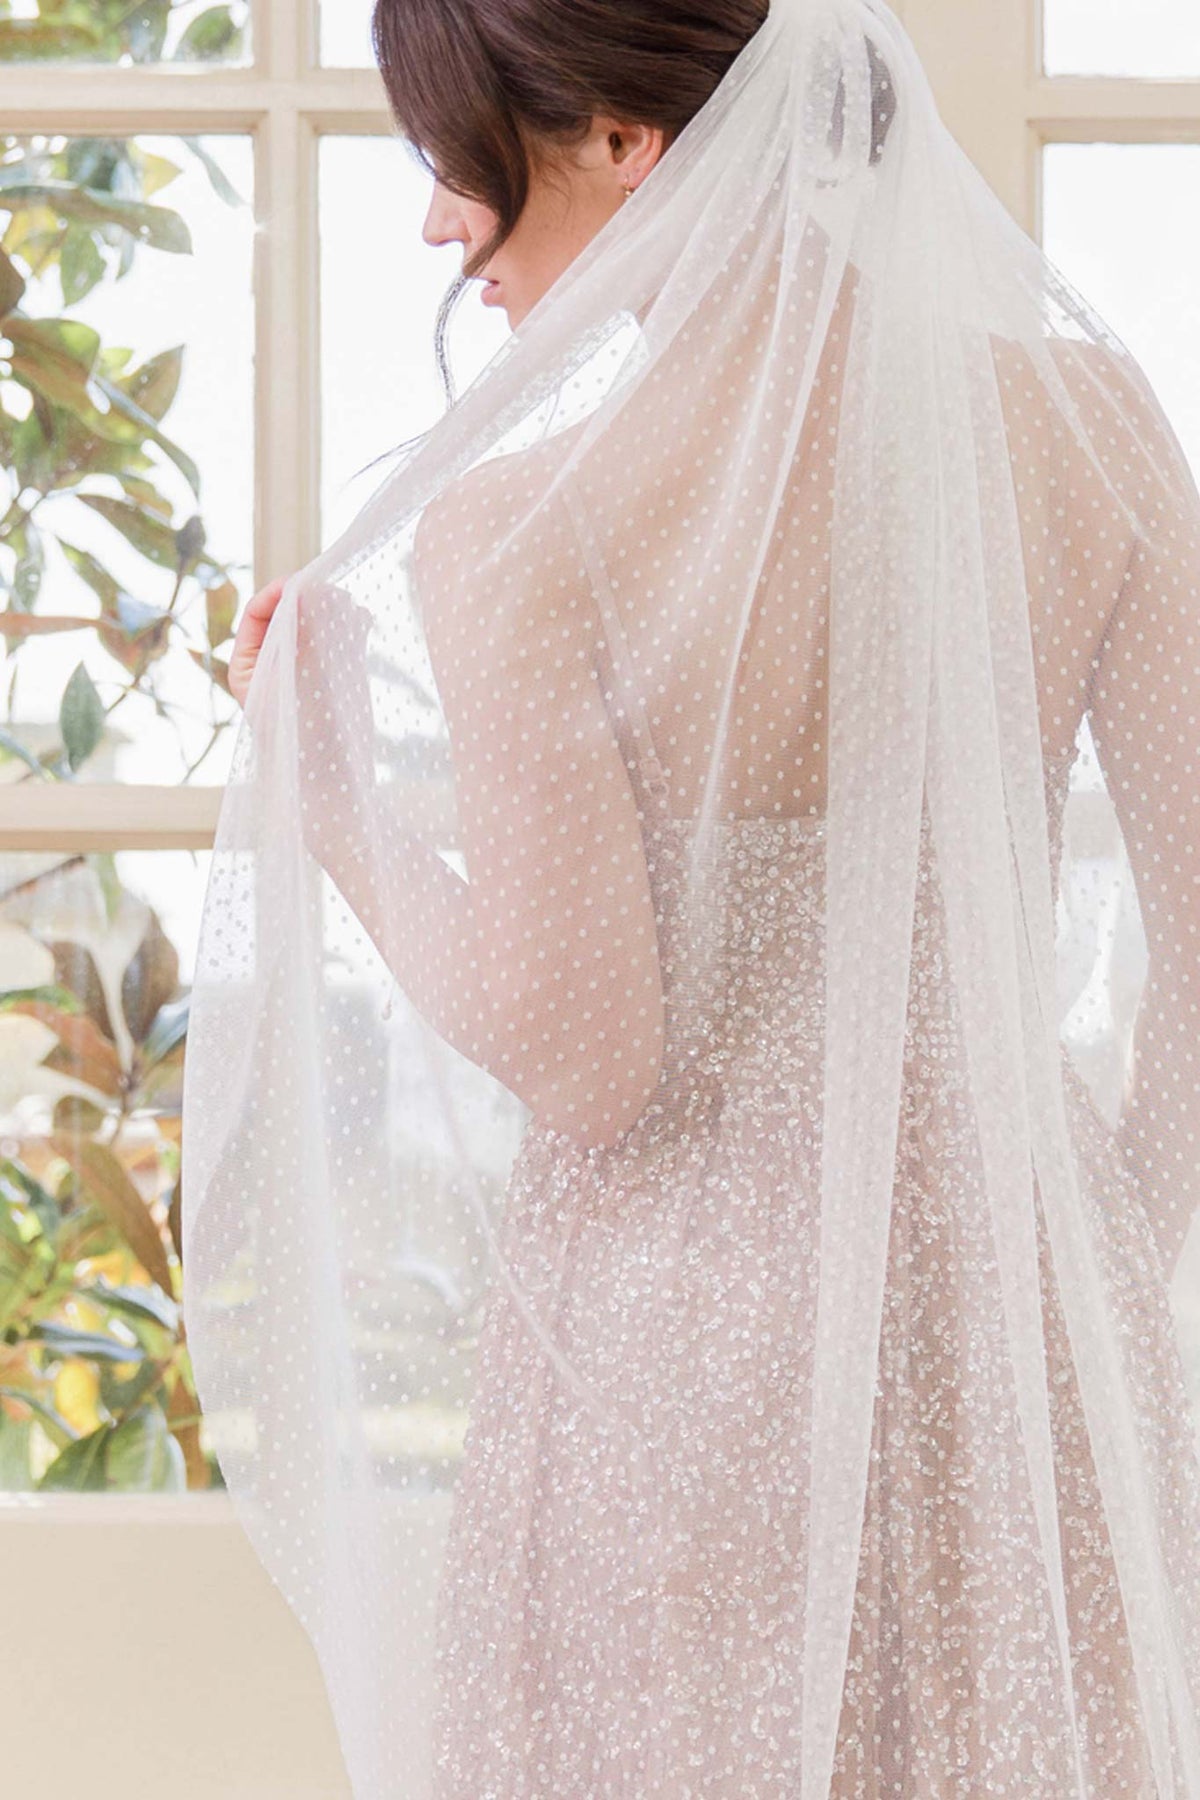 Wedding Veil Polka dot silk style tulle wedding veil - &#39;Dot&#39;